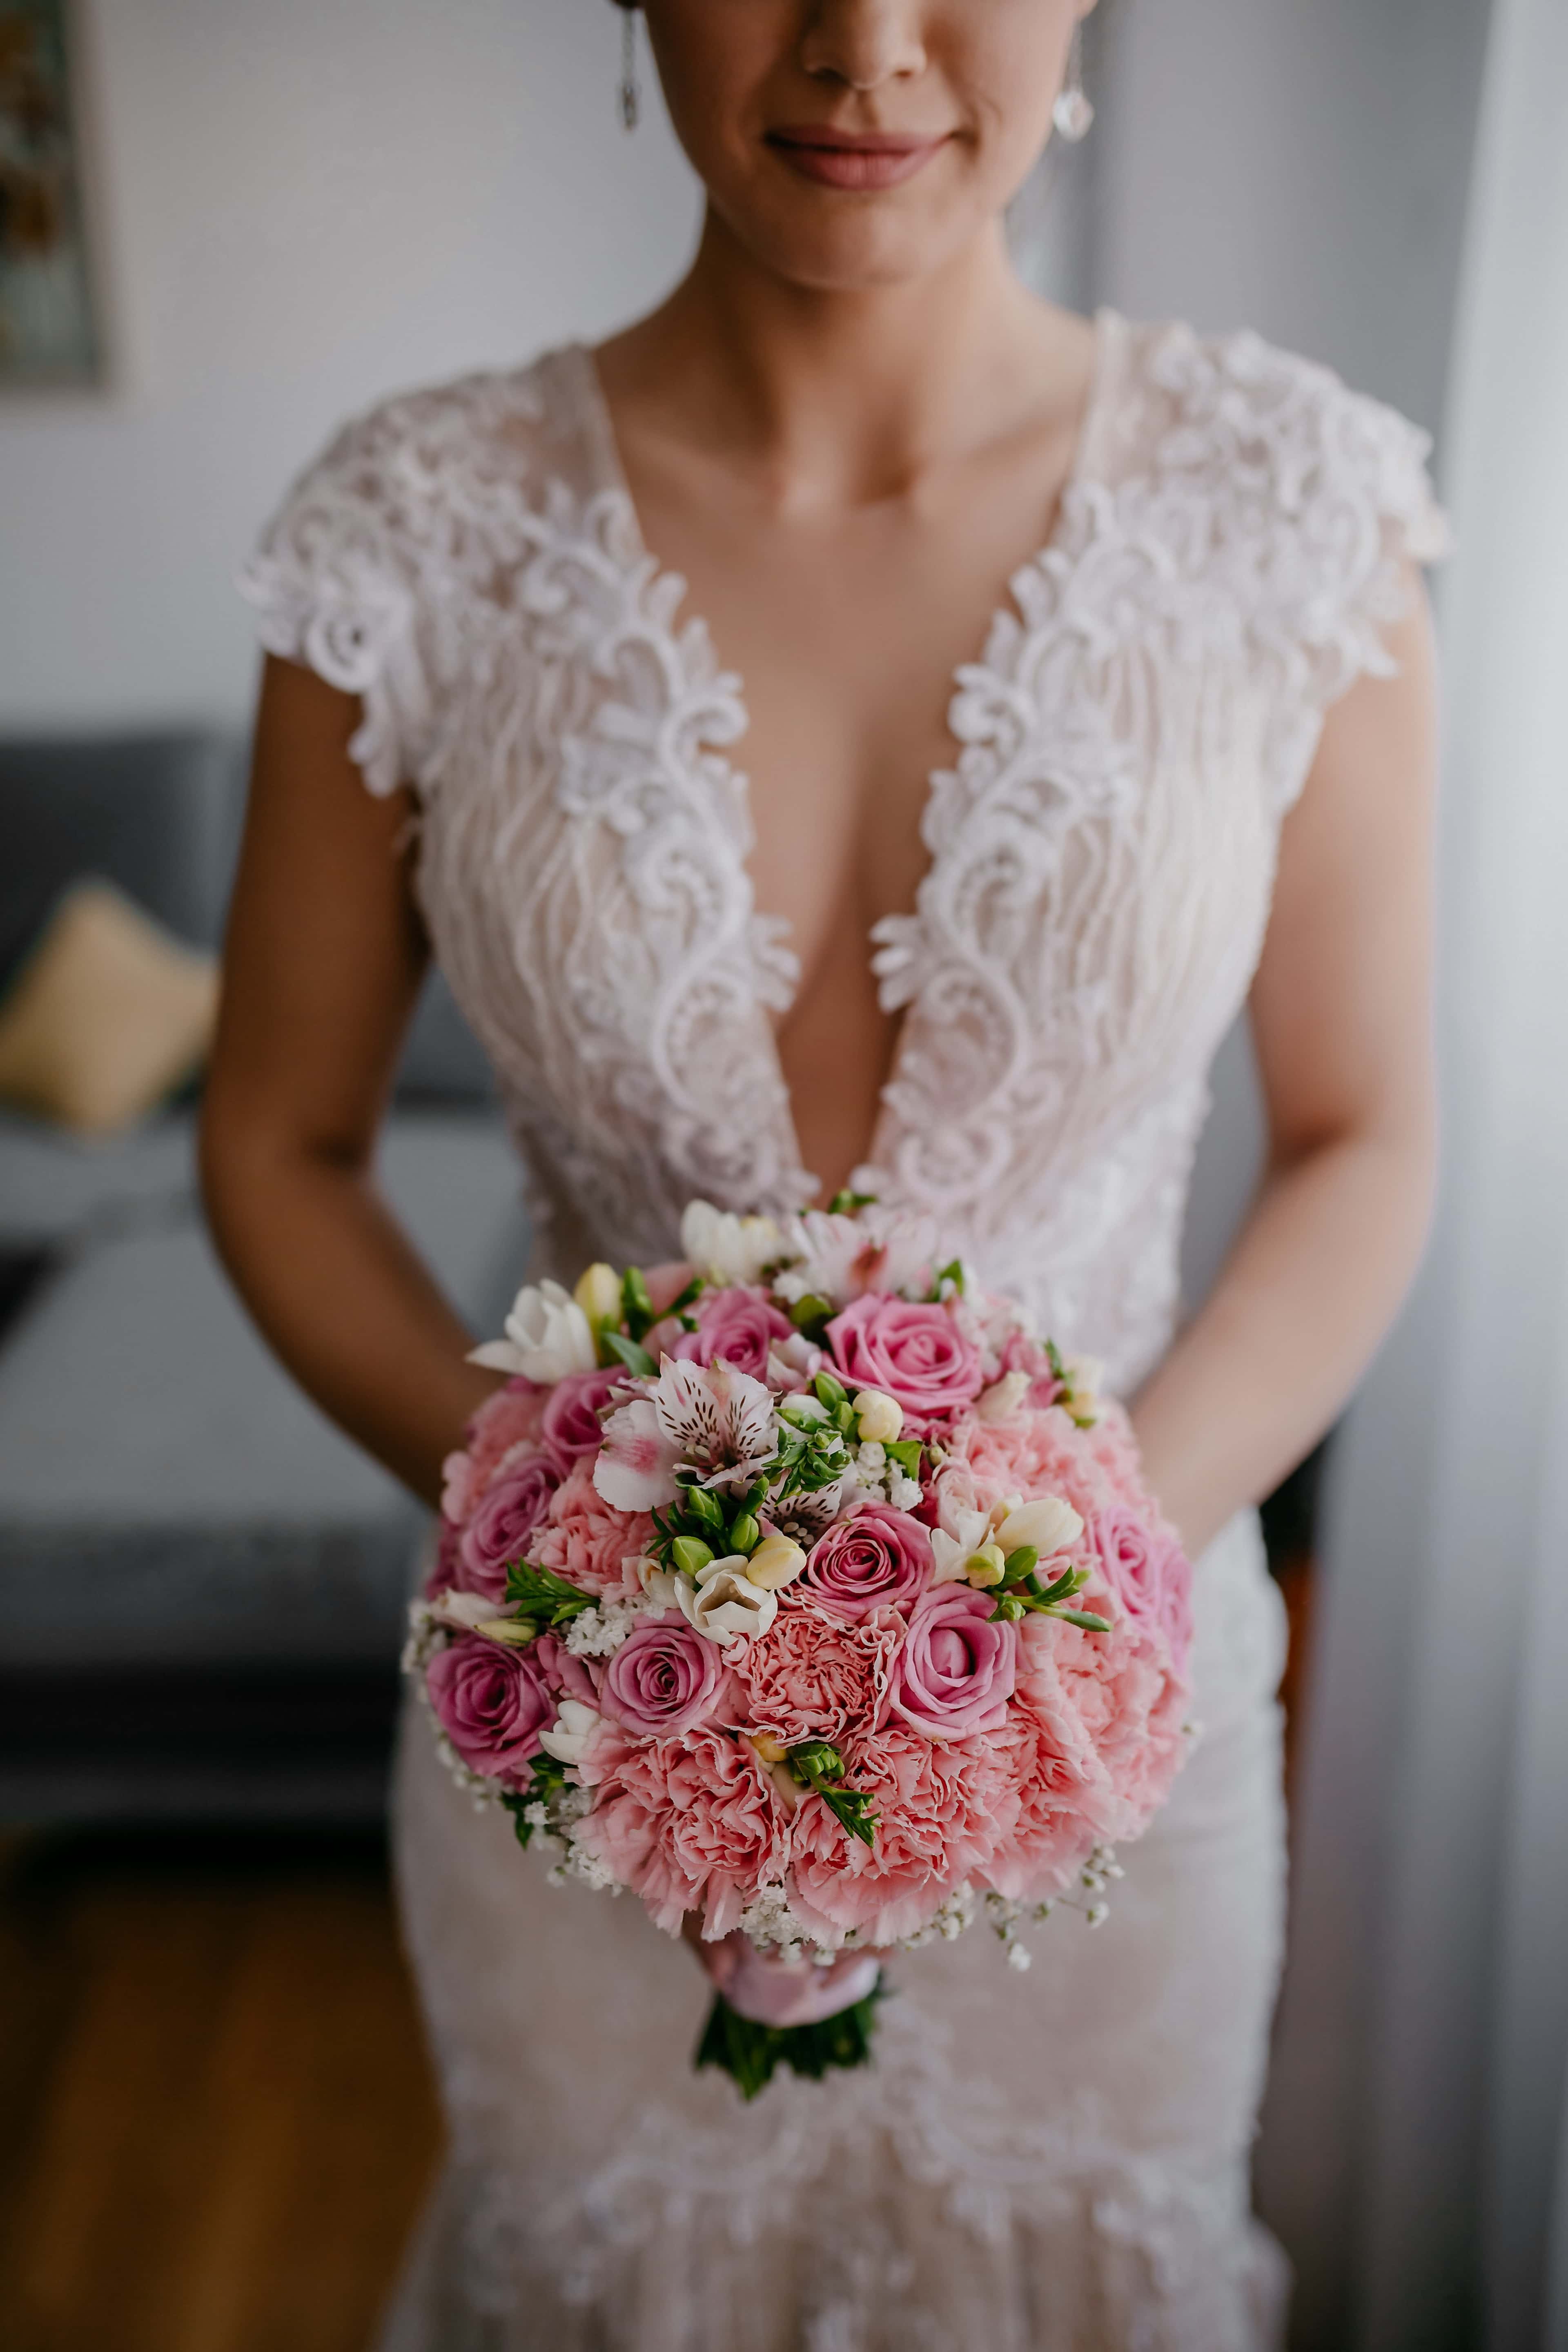 Free picture: standing, bride, holding, wedding bouquet, woman, wedding,  fashion, bouquet, pretty, elegant